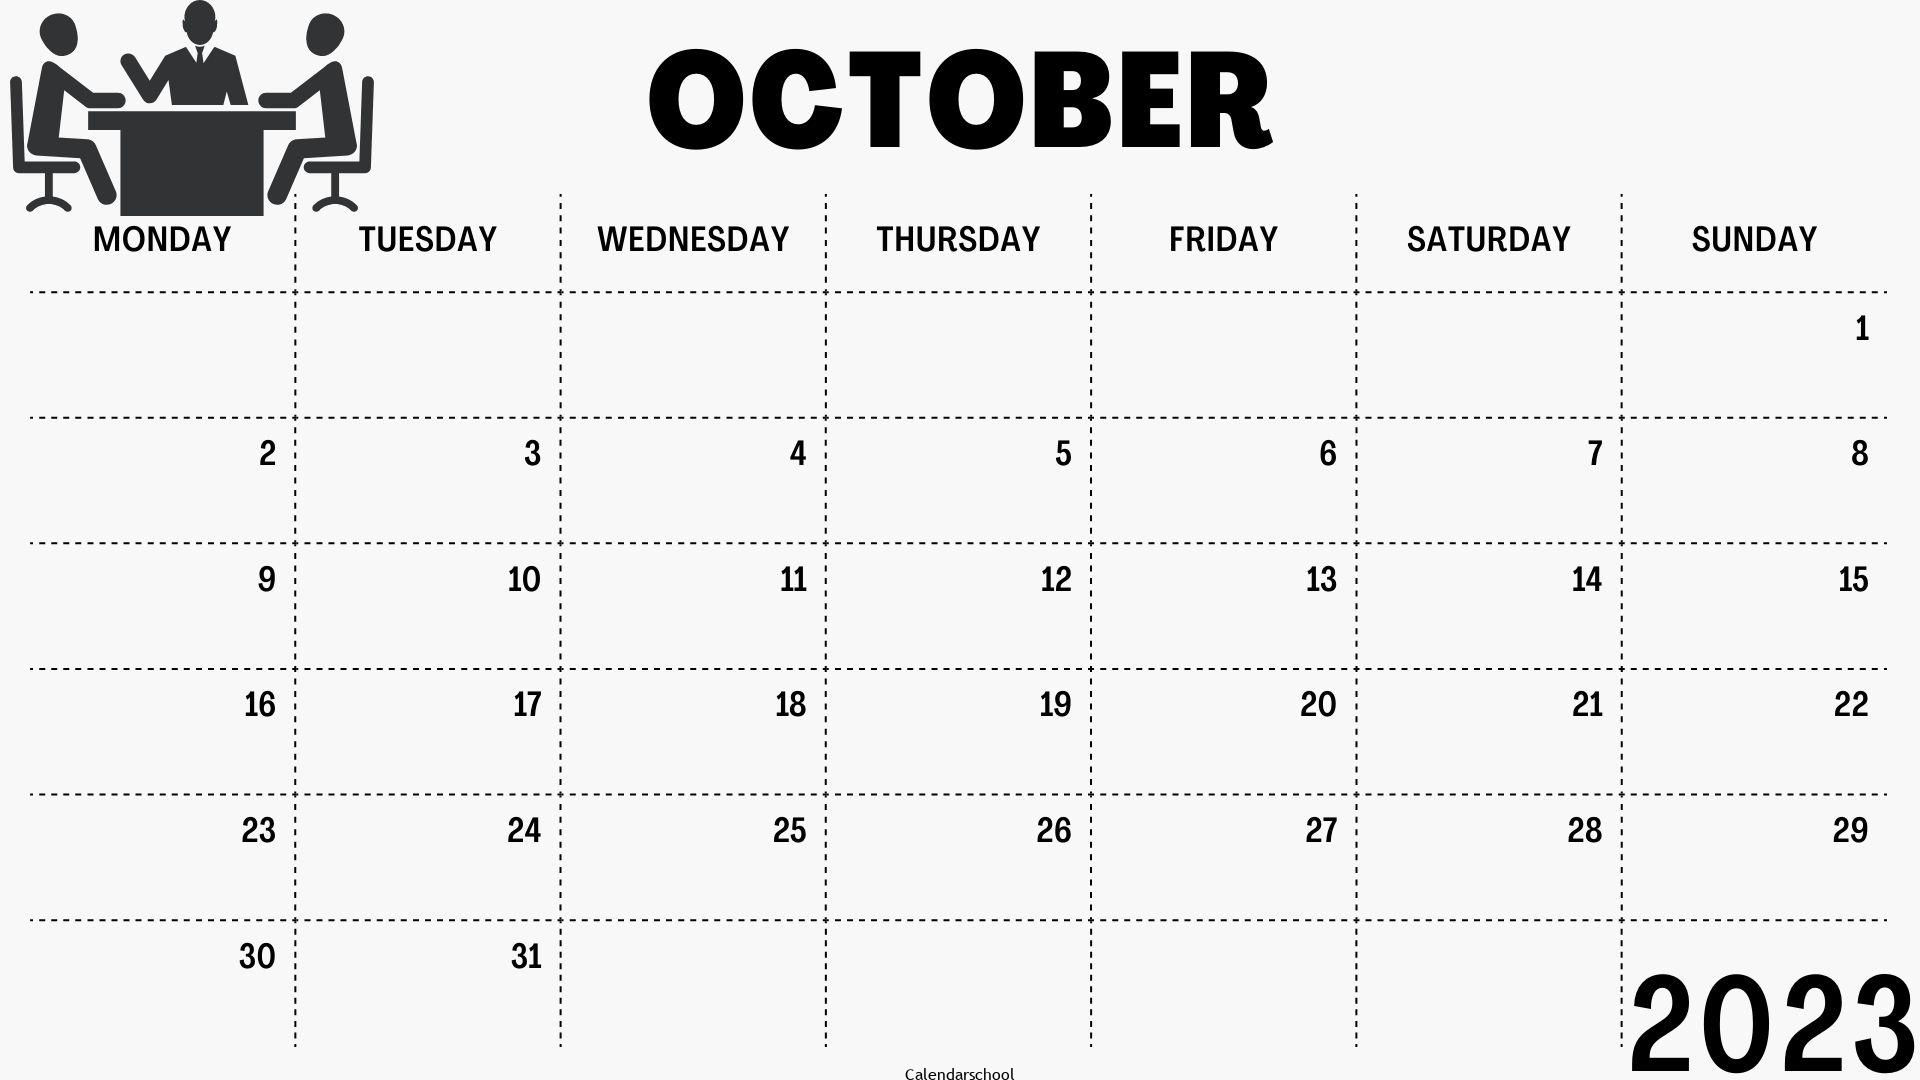 October 2023 Free Blank Calendar